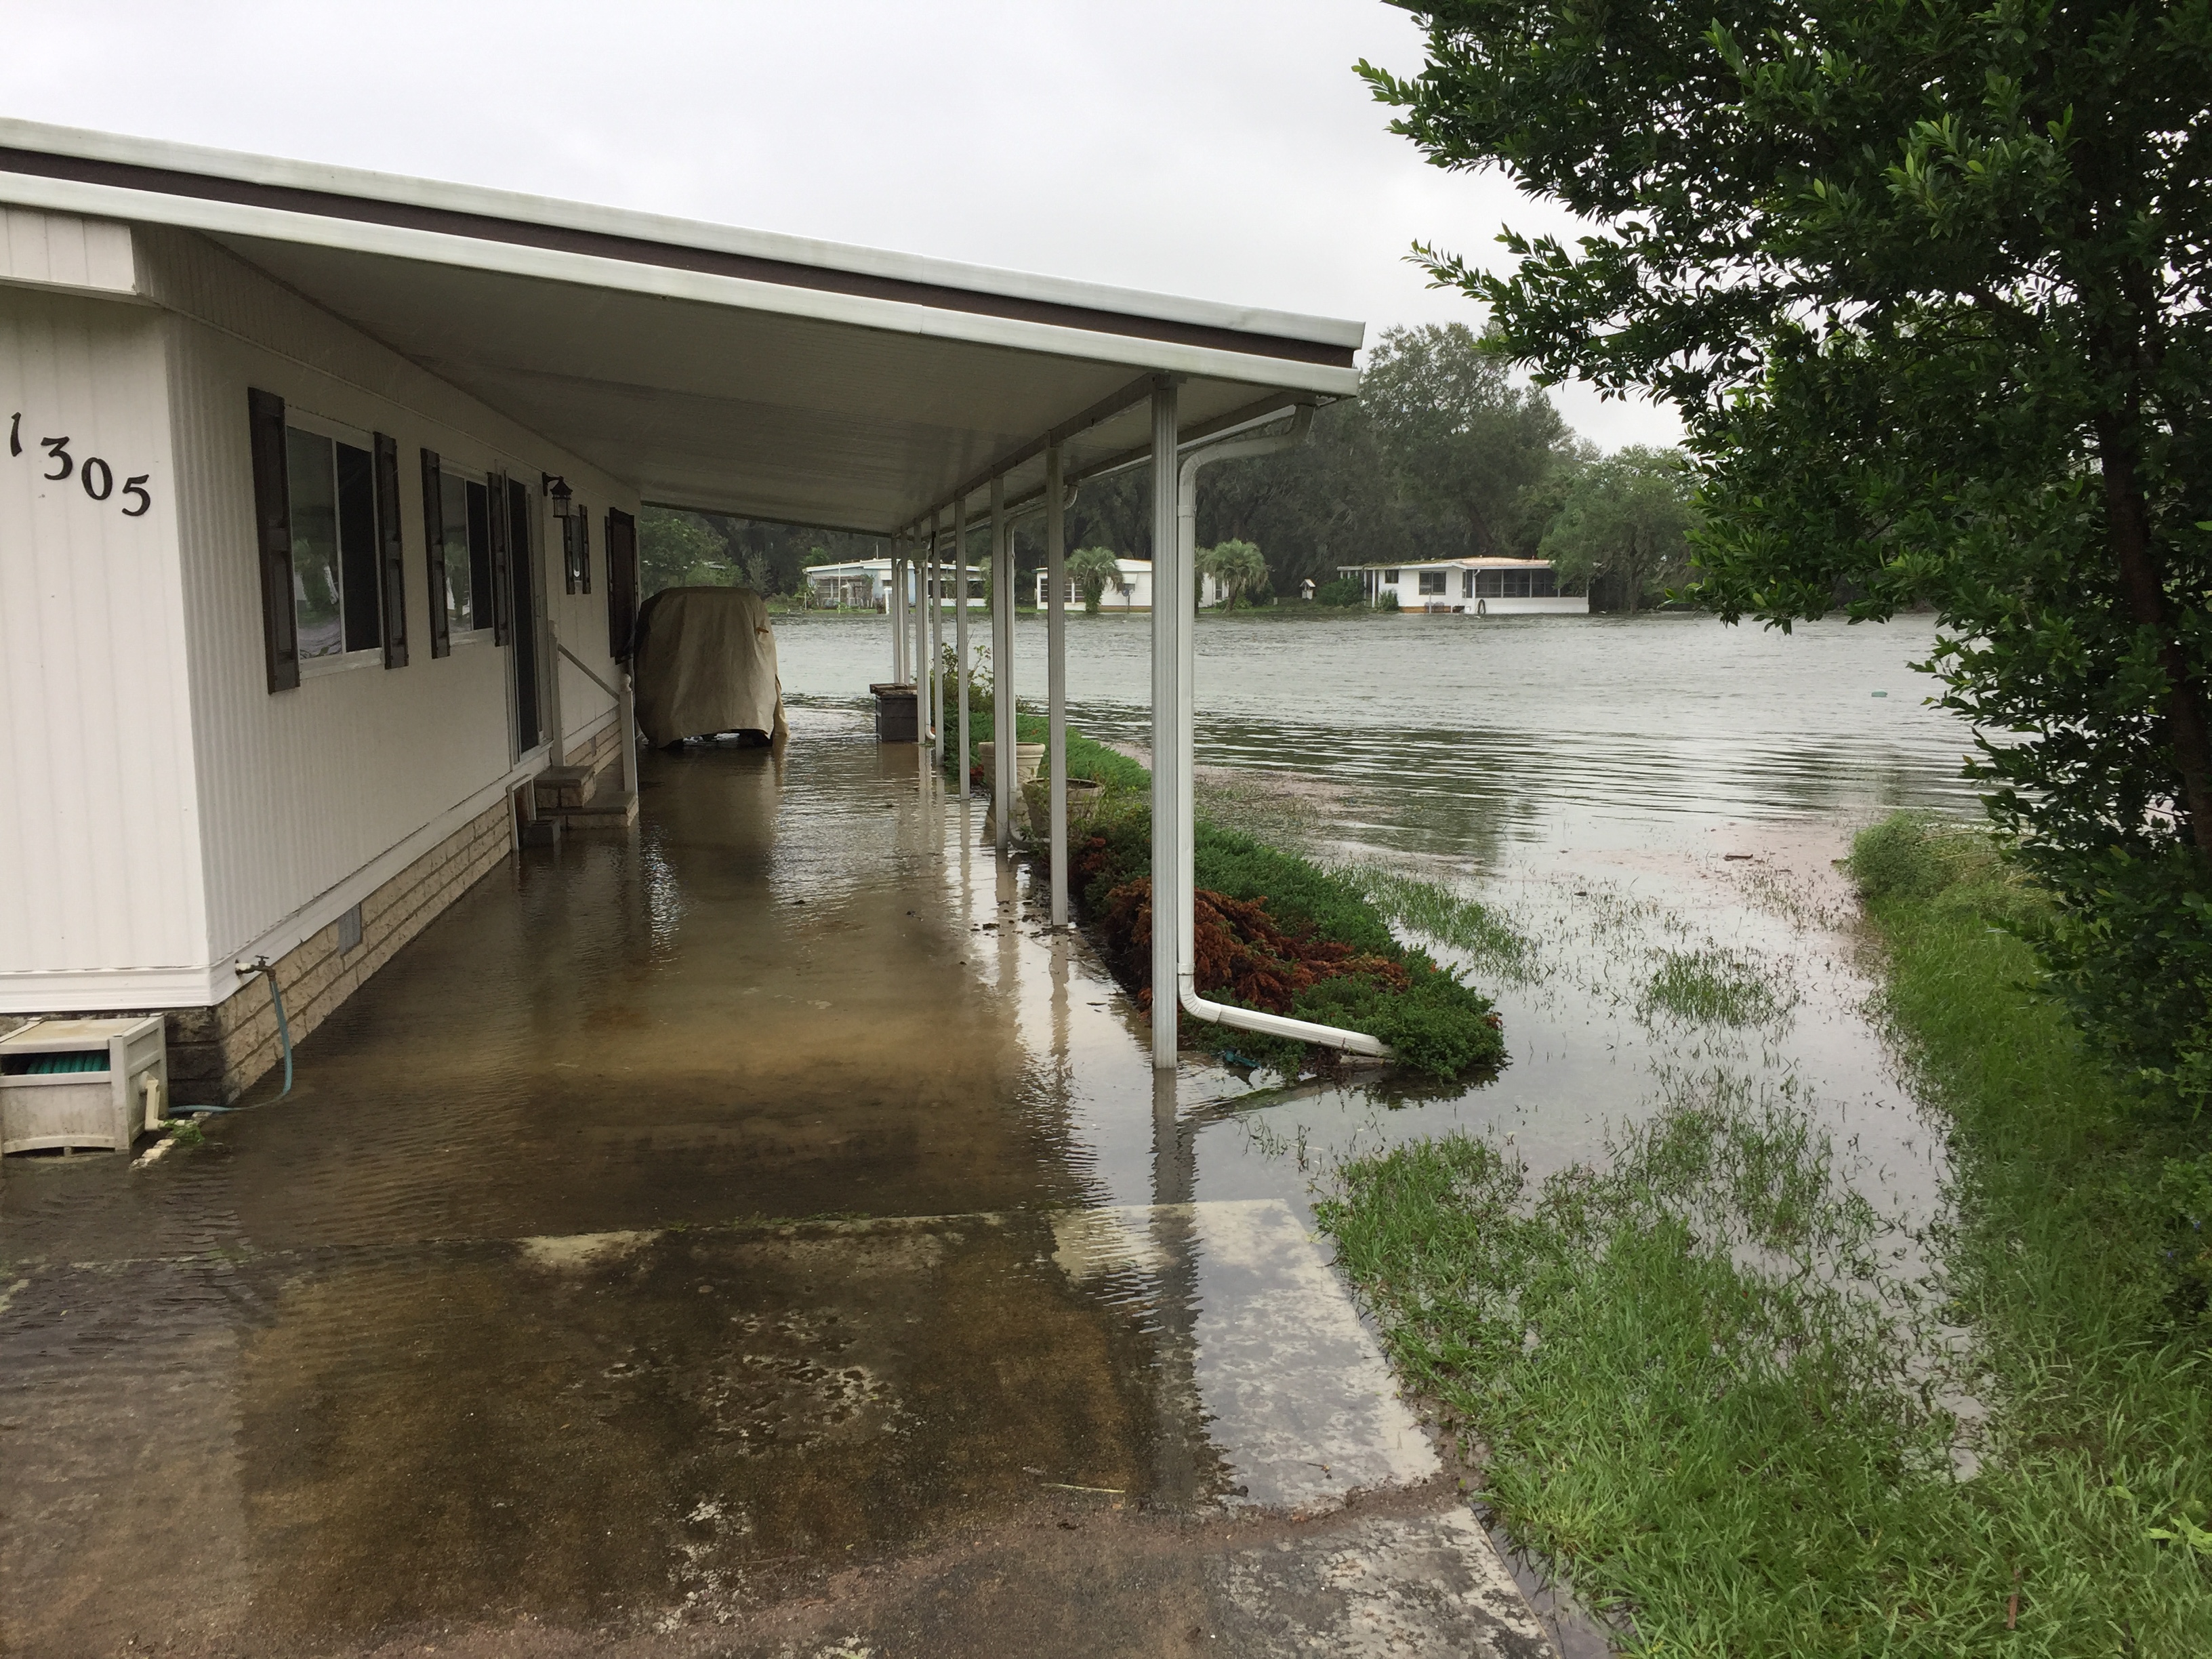 Flooding in some of the homes in Orange Blossom Gardens near golf cart bridge